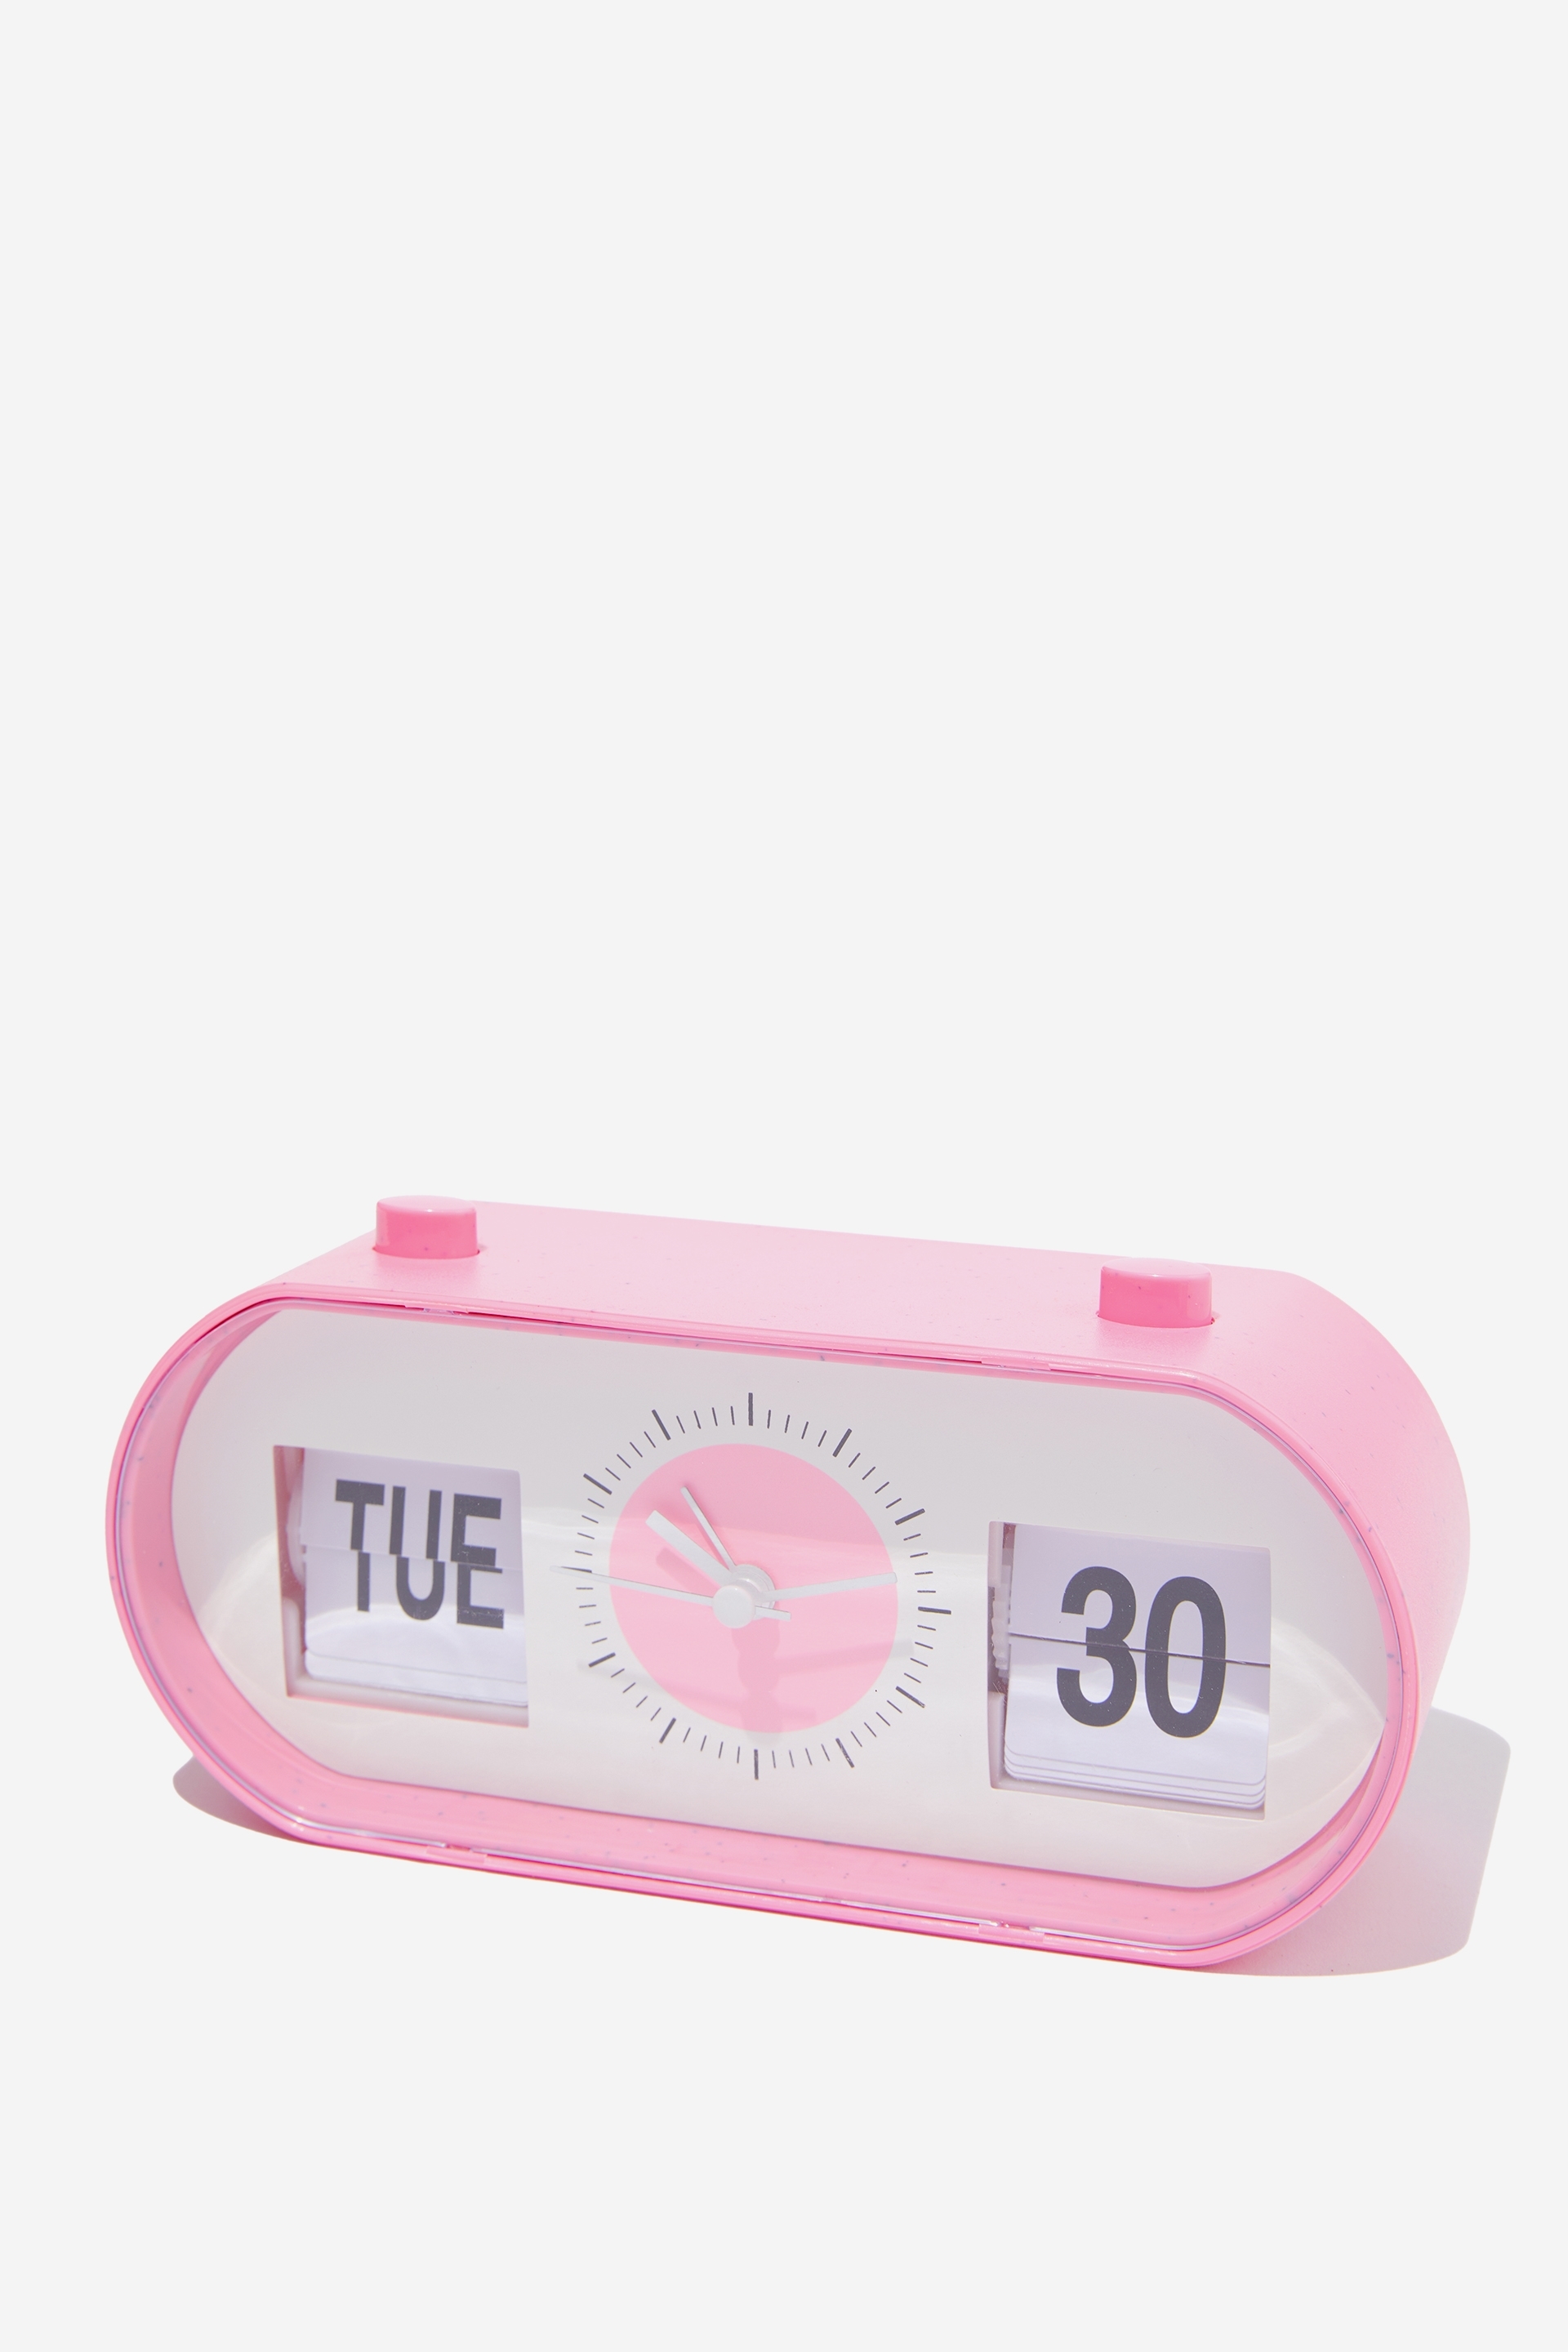 Typo - Flip Clock V2.0 - Rosa powder speckle